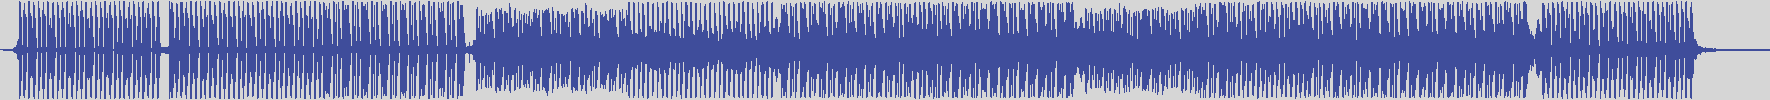 nf_boyz_records [NFY030] Victor Danieli - Deep Web [Deep Reasons Mix] audio wave form